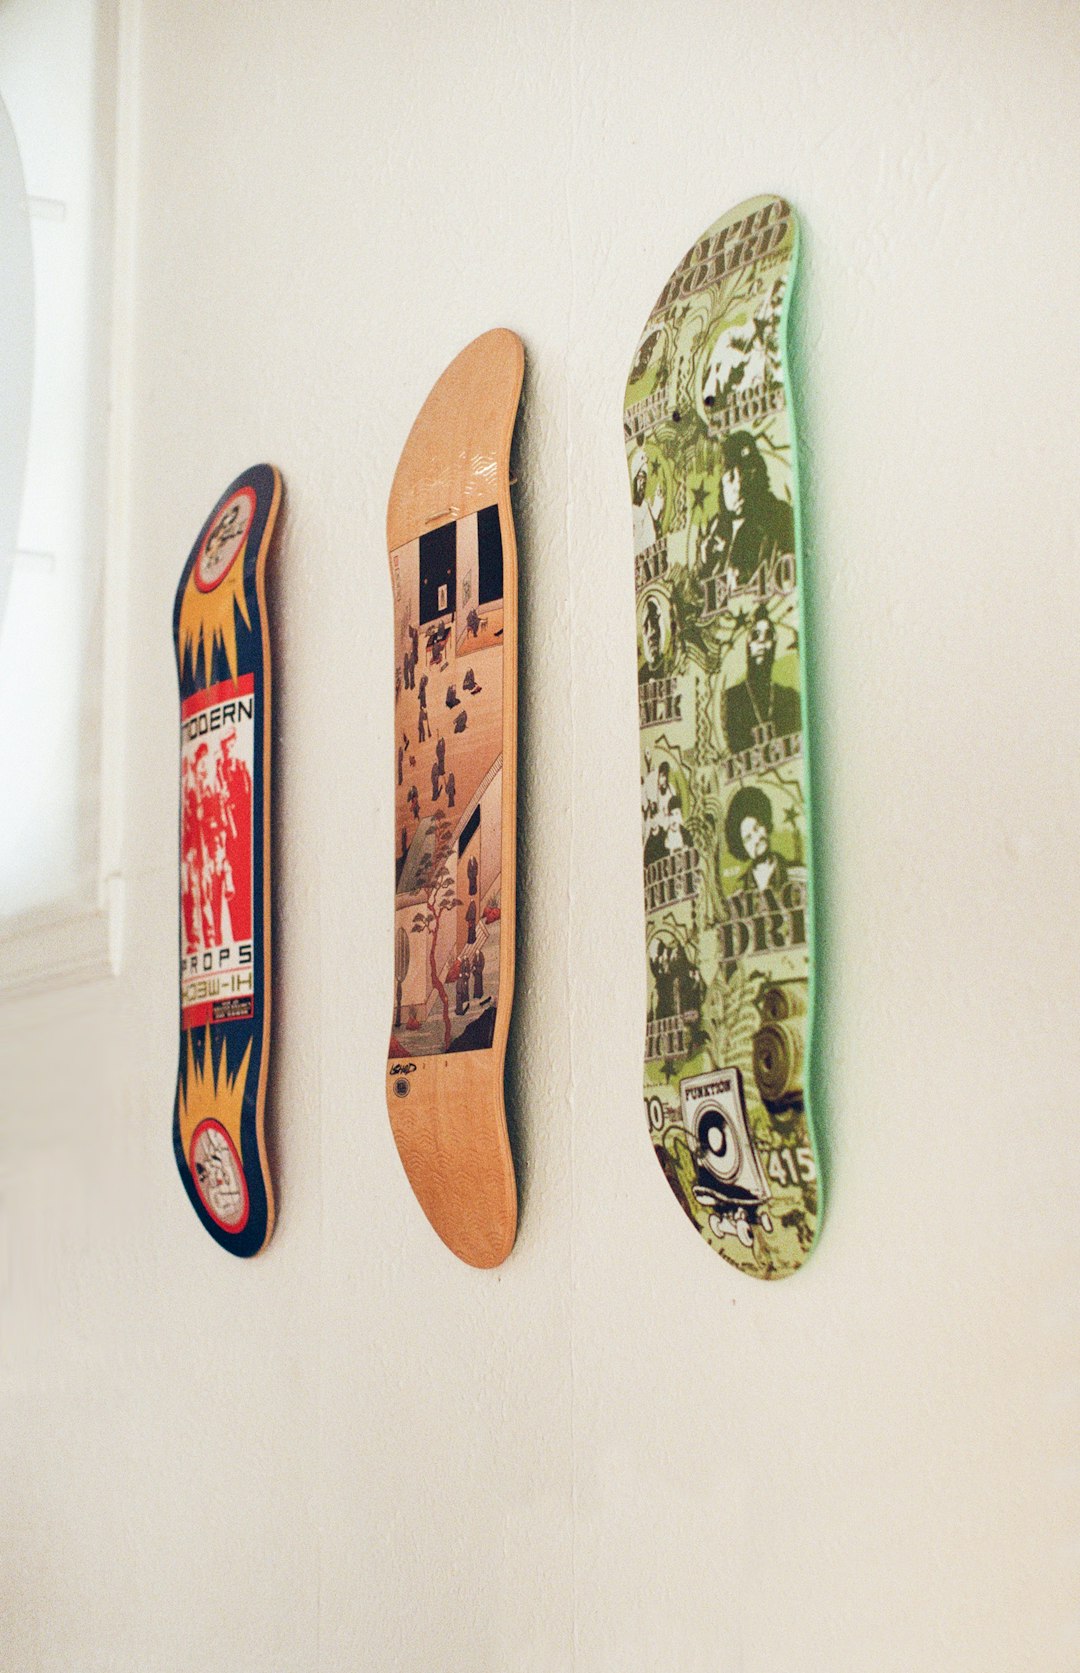 dtf transfer design skateboard decks hung on wall